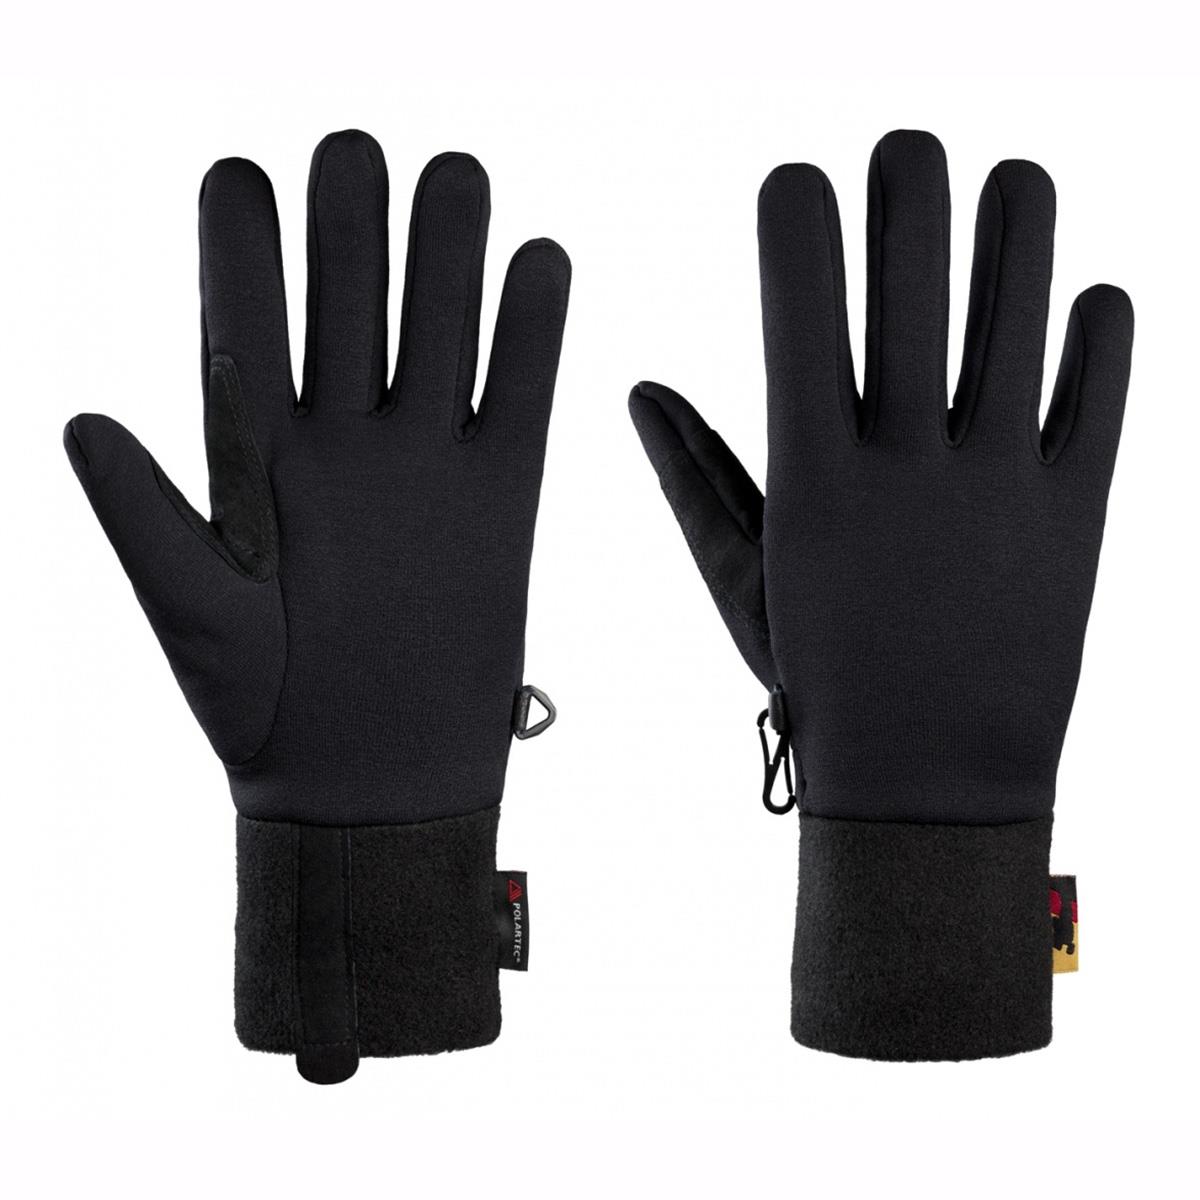 Перчатки STRETCH GLOVE V2 (4022A) БАСК перчатки manipula specialist юнит 300 tns 53 р 8 пер 666 8